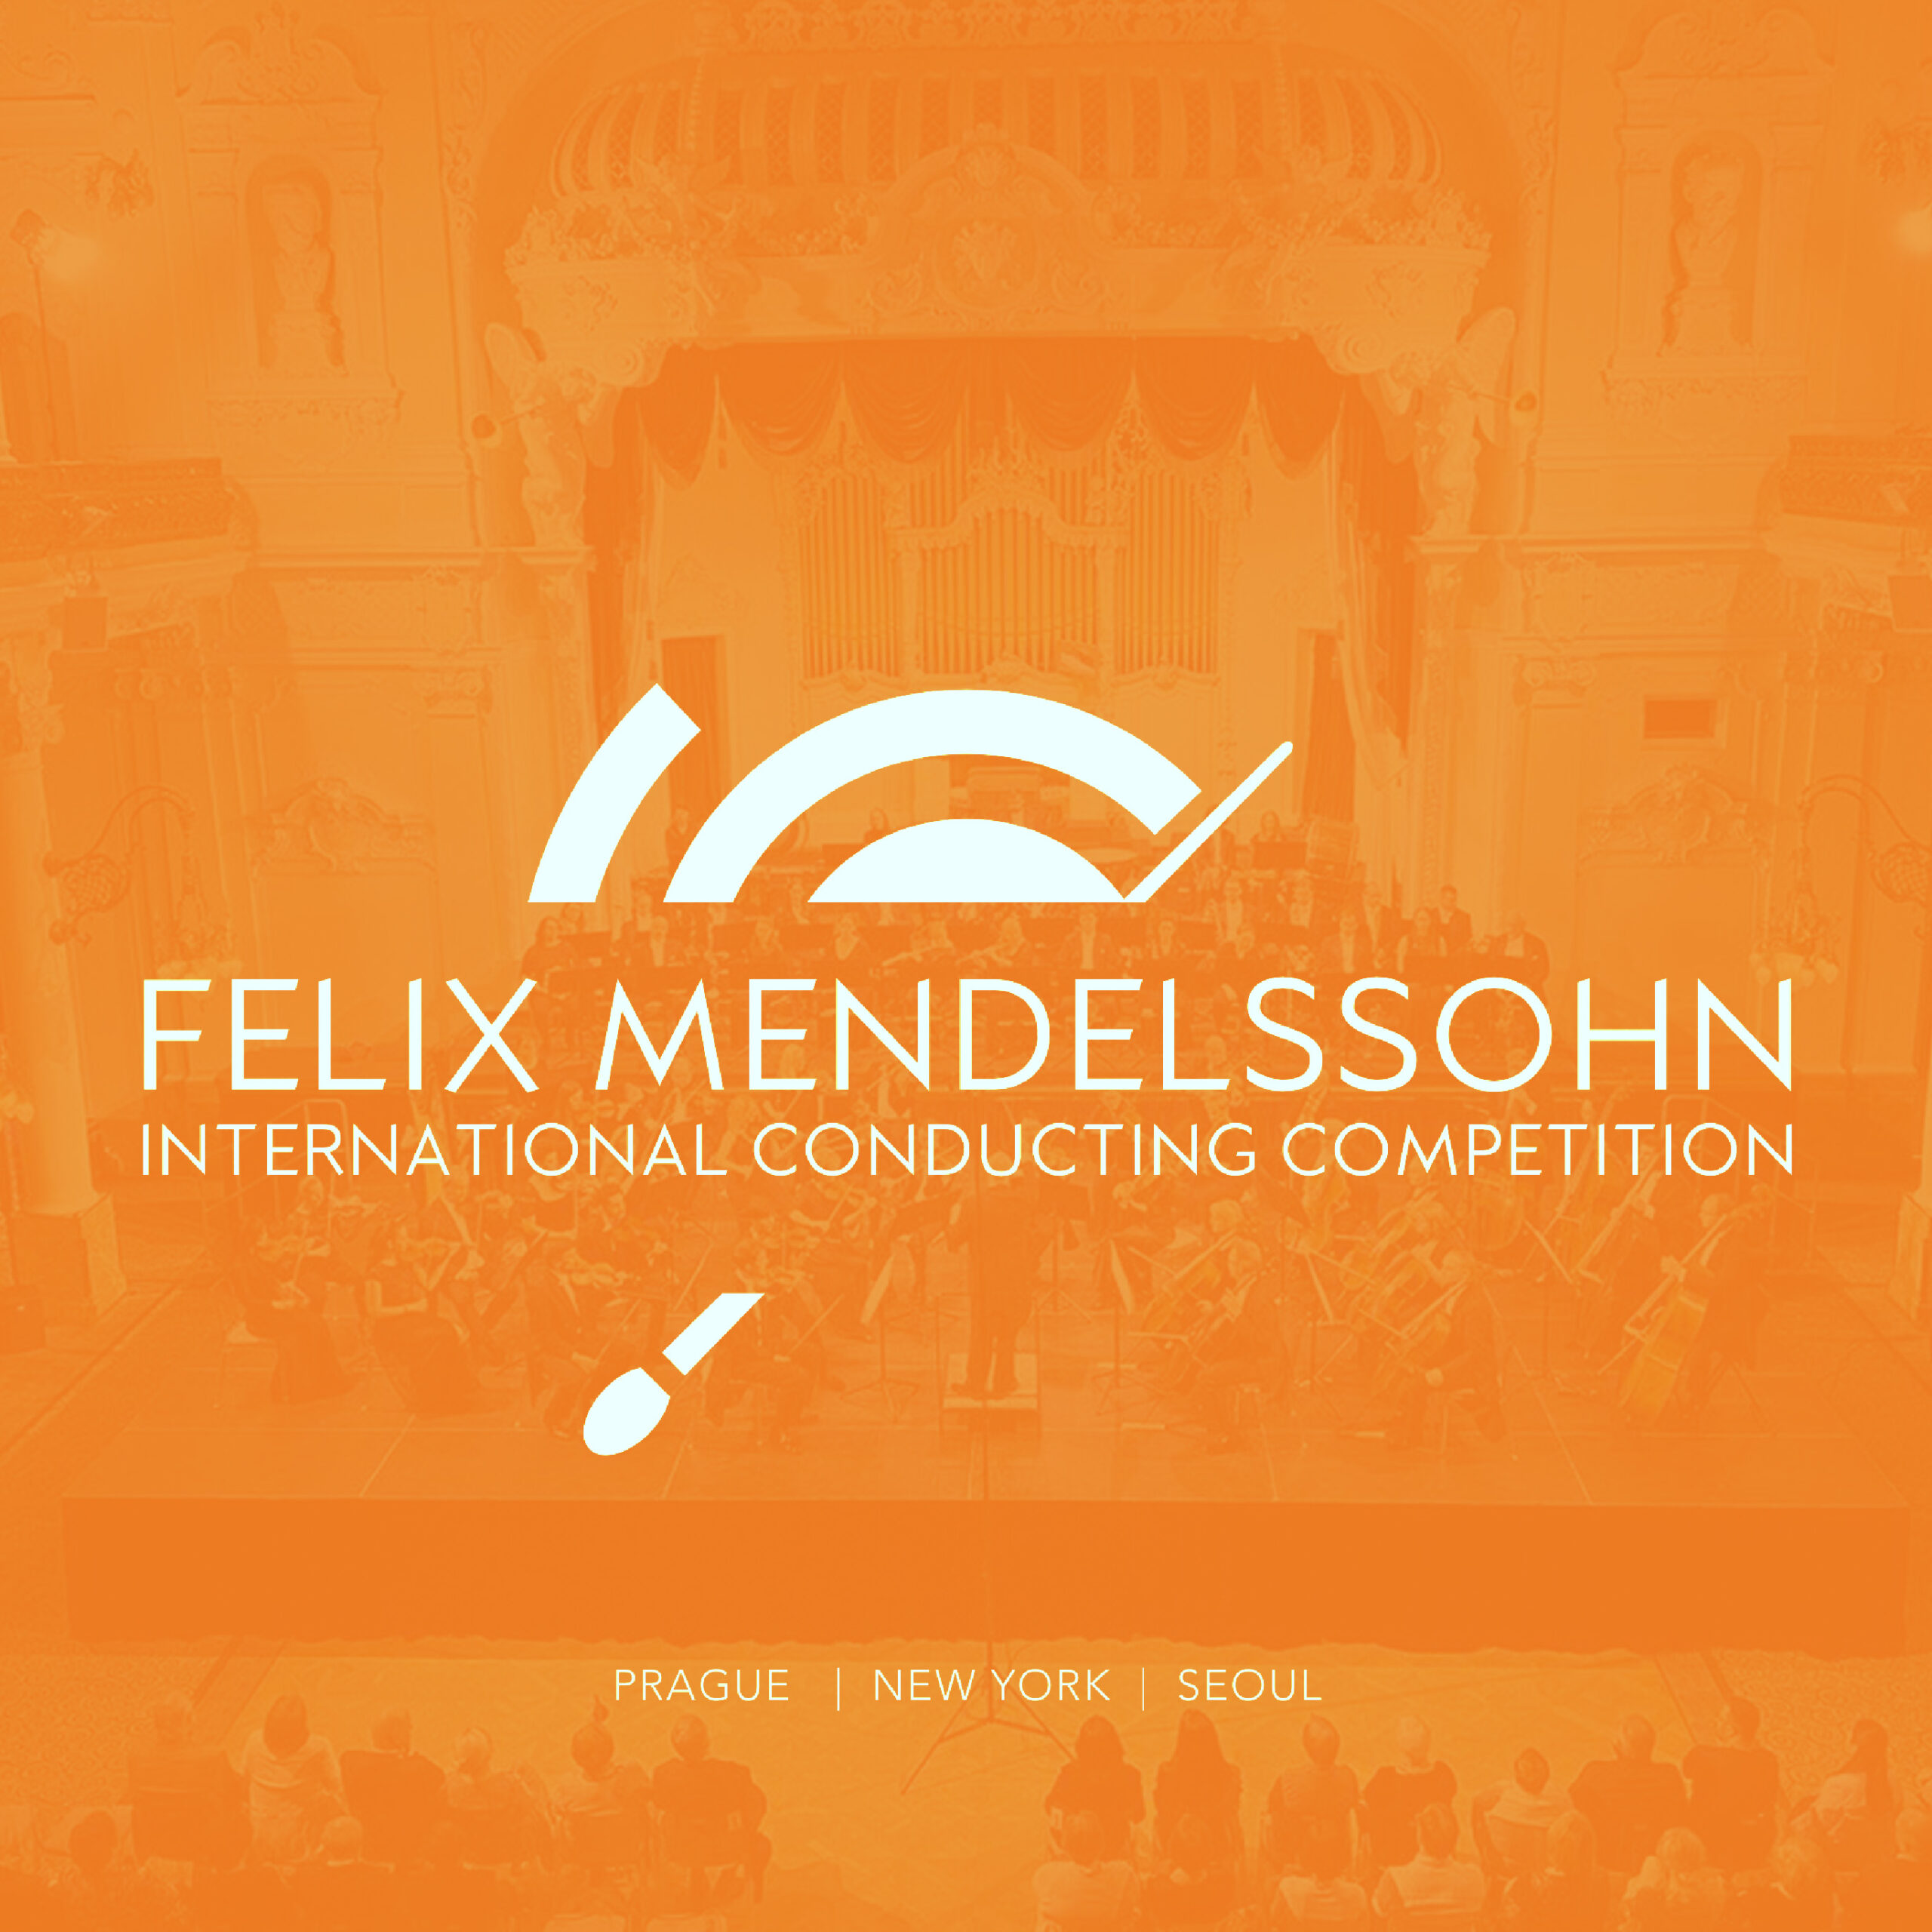 Mendelssohn Conducting Competition